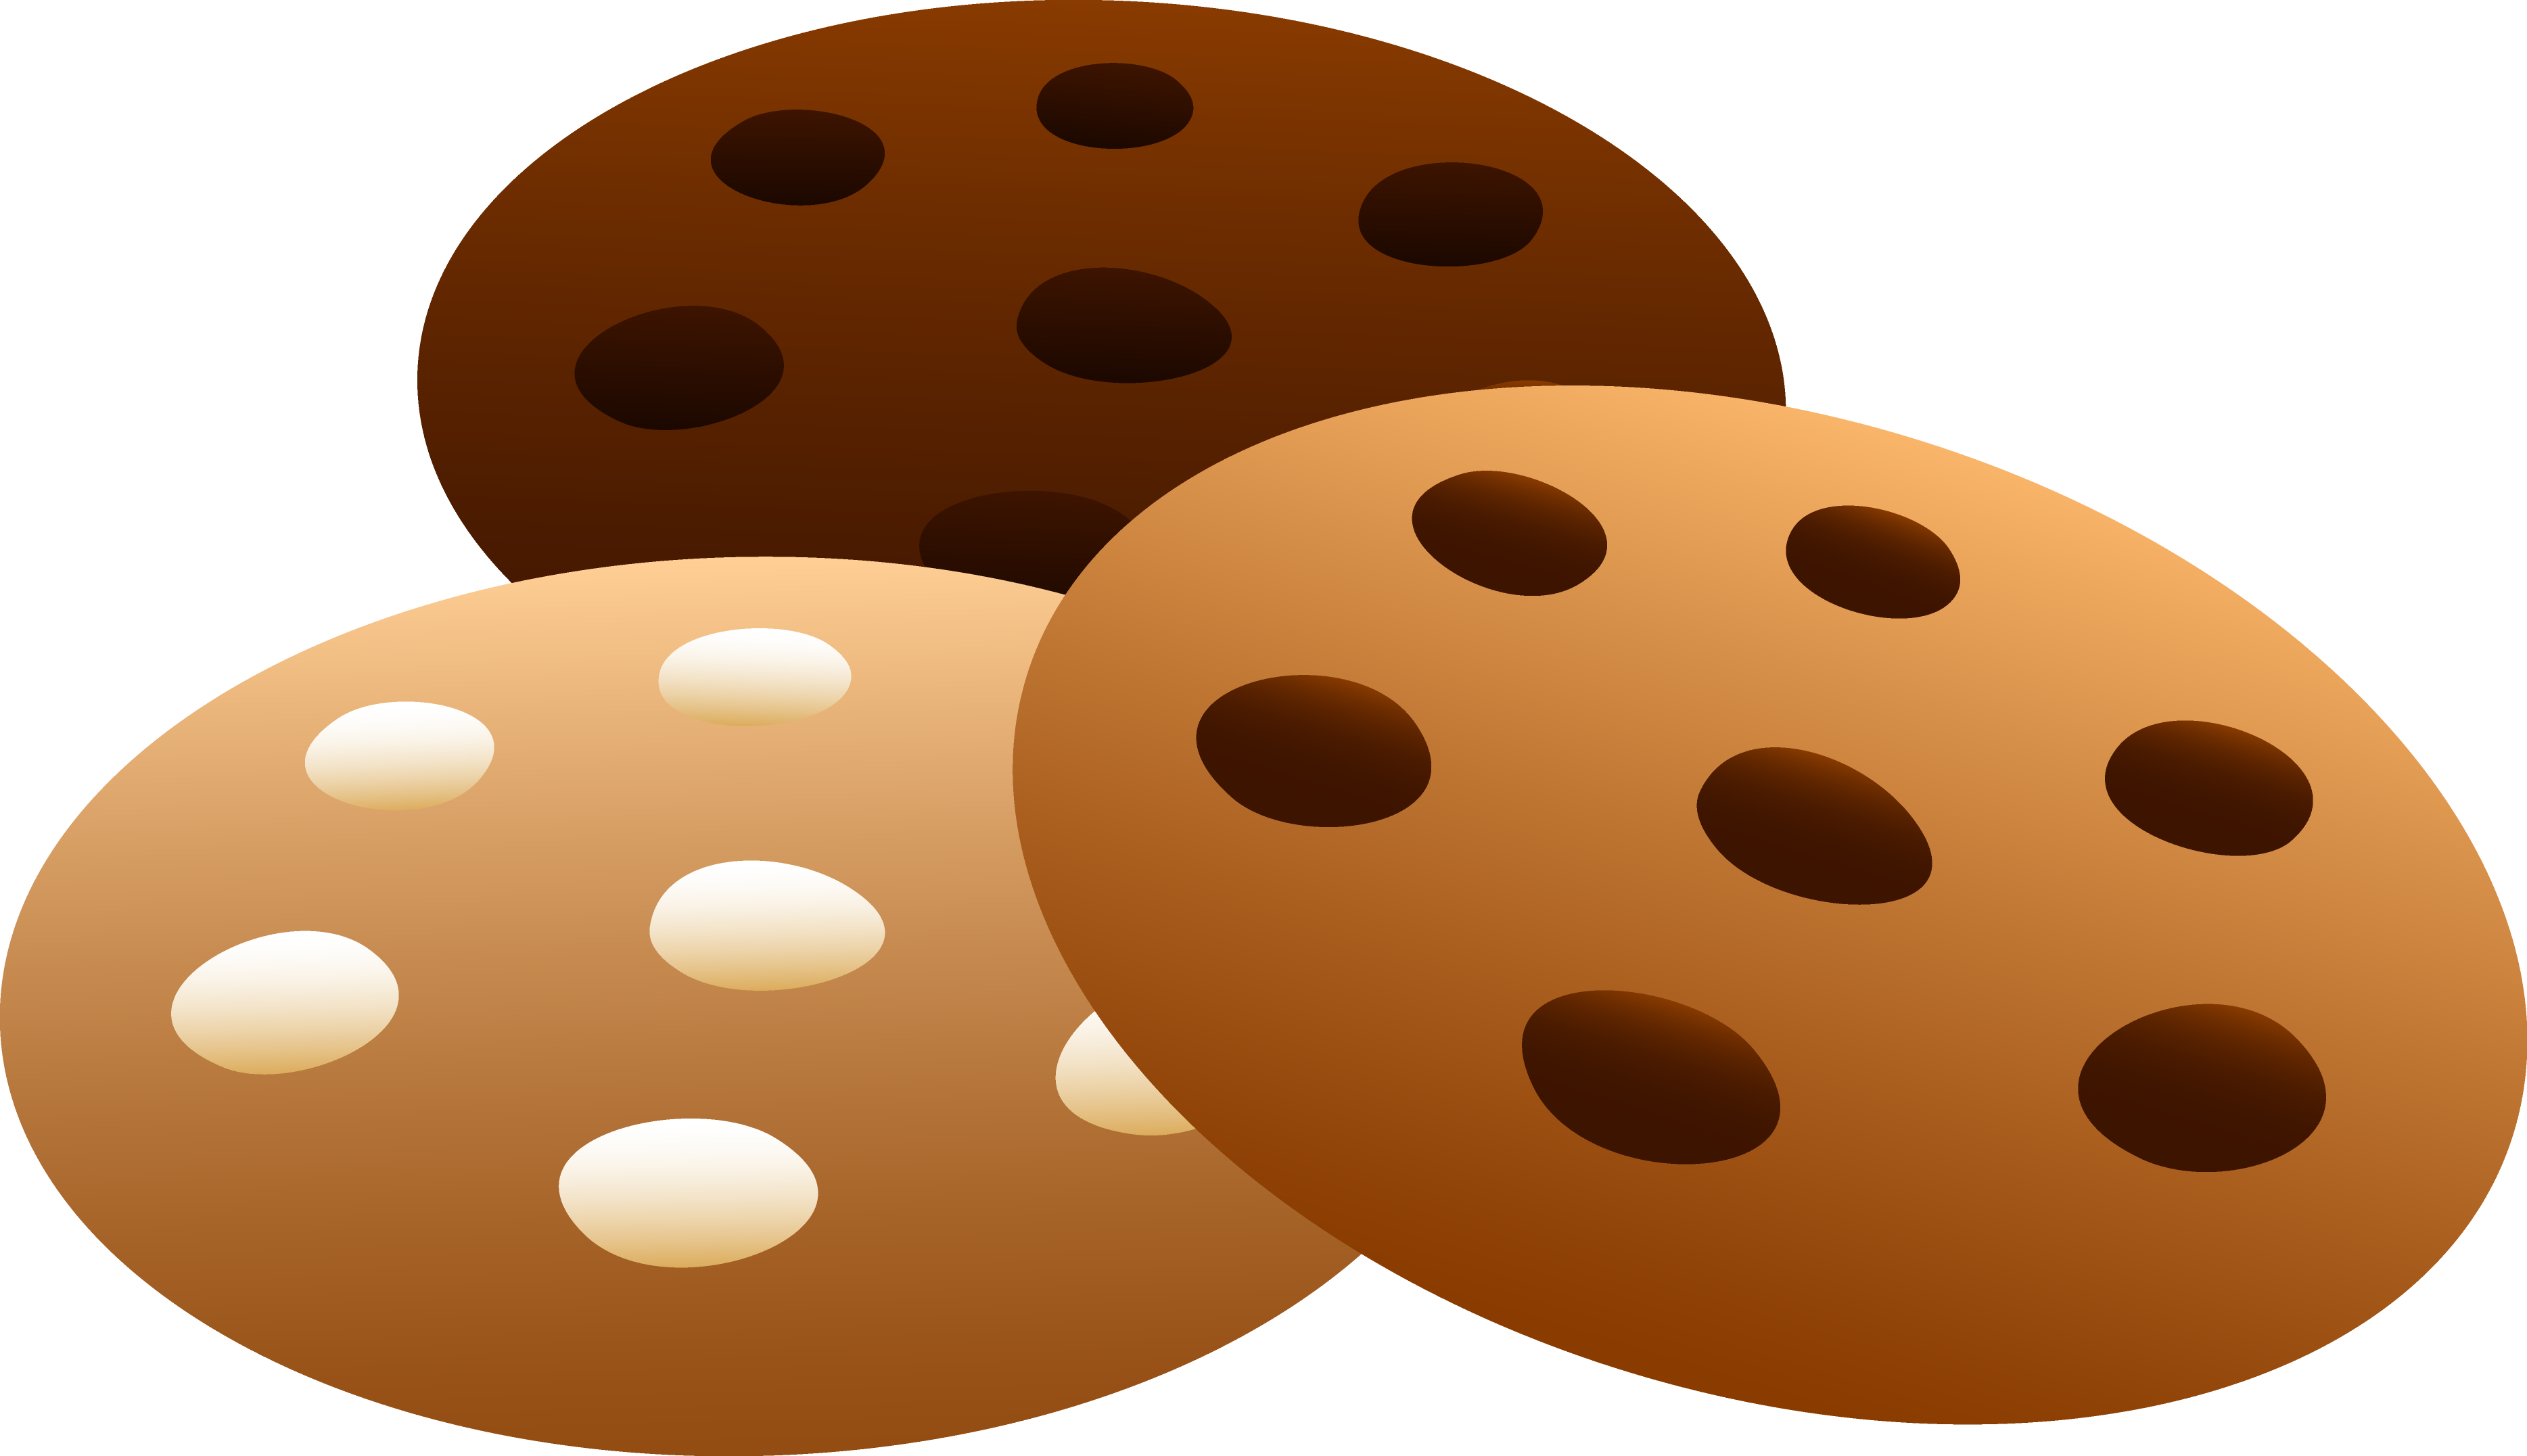 Cookie clip art images. Clipart cookies